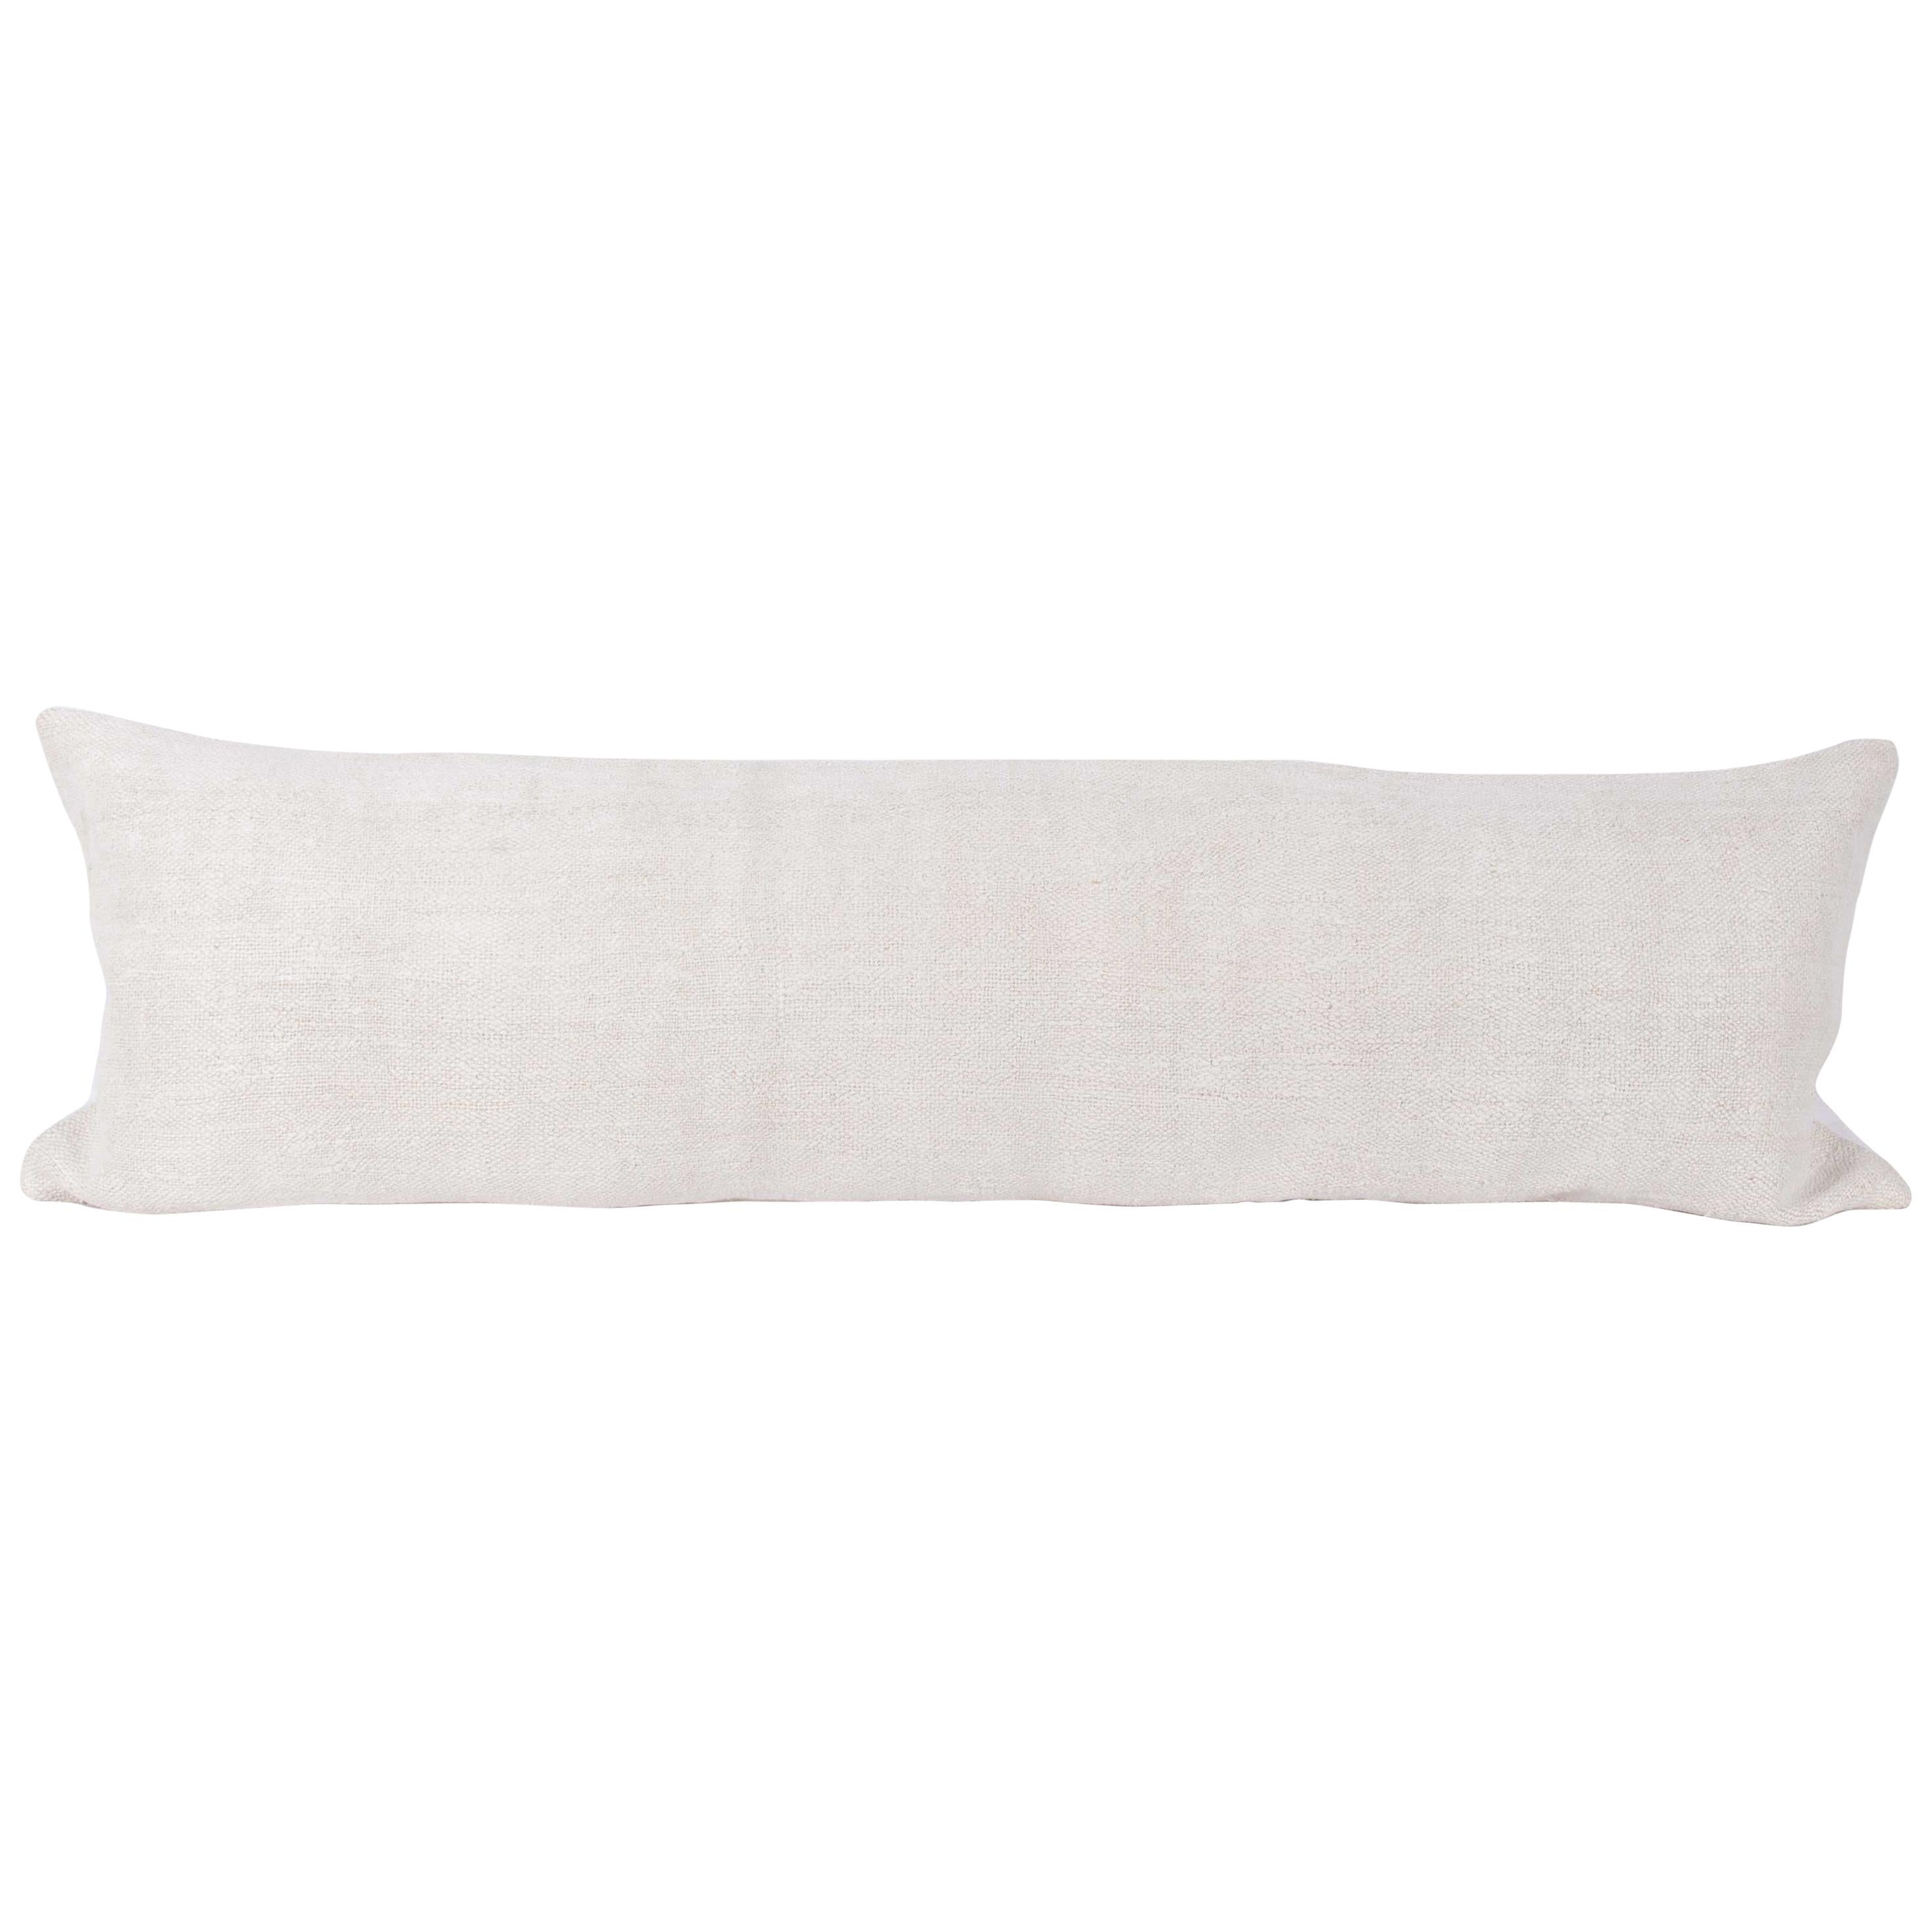 Hemp Lumbar Pillow Case made from a Mid-20th Century Turkish Hemp Kilim